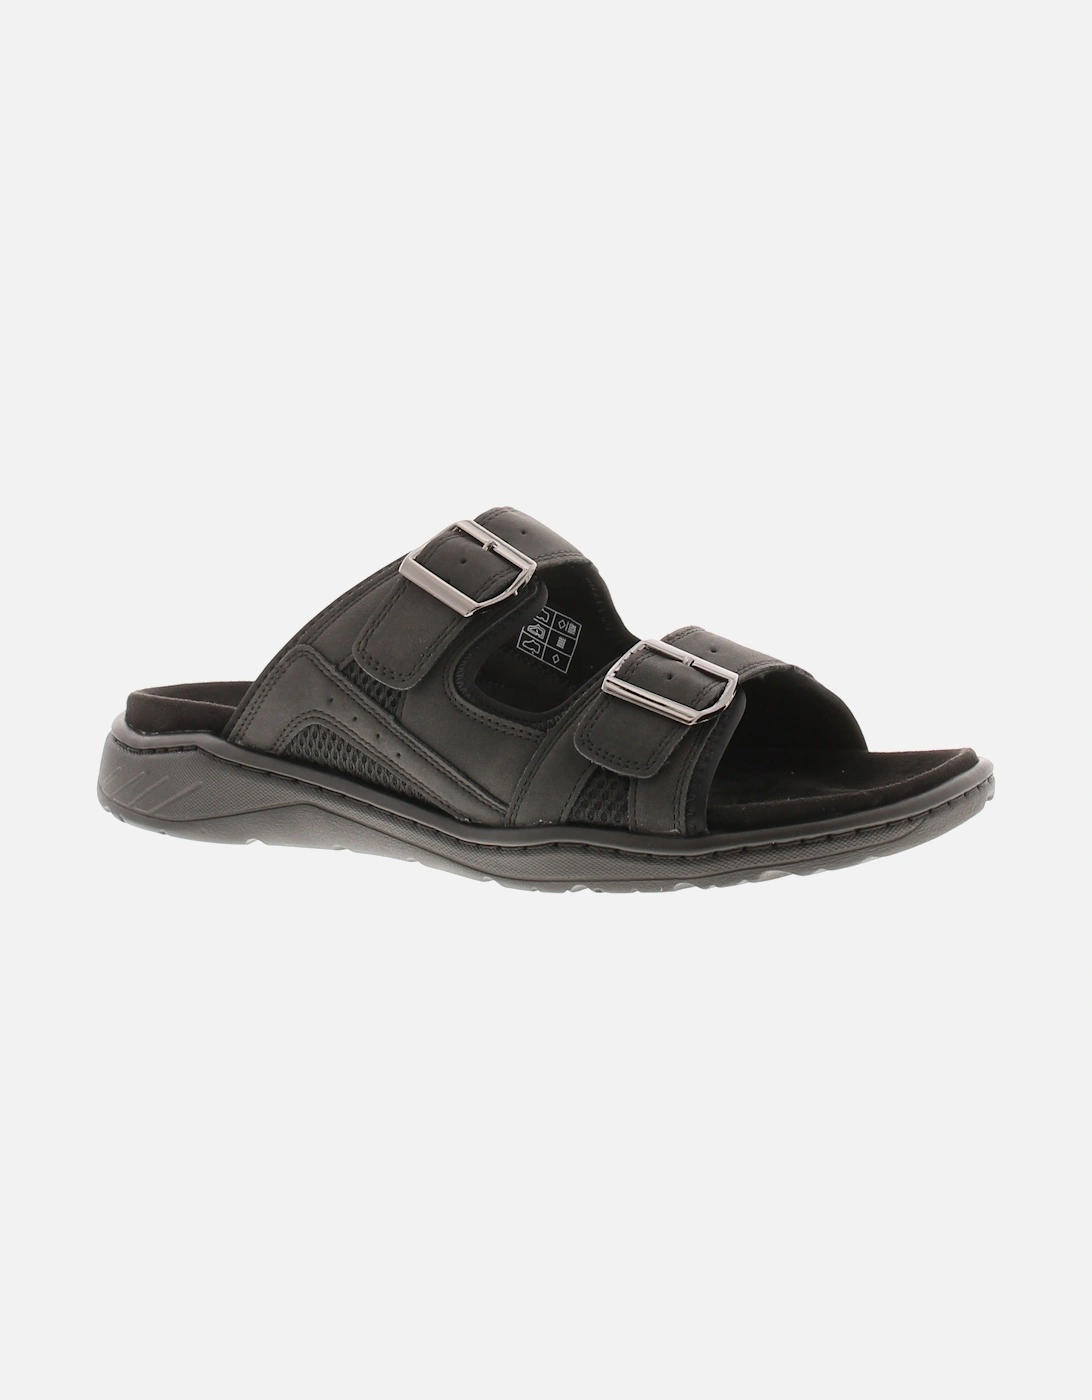 Mens Beach Sandals Mules Gilbert Buckle black UK Size, 6 of 5